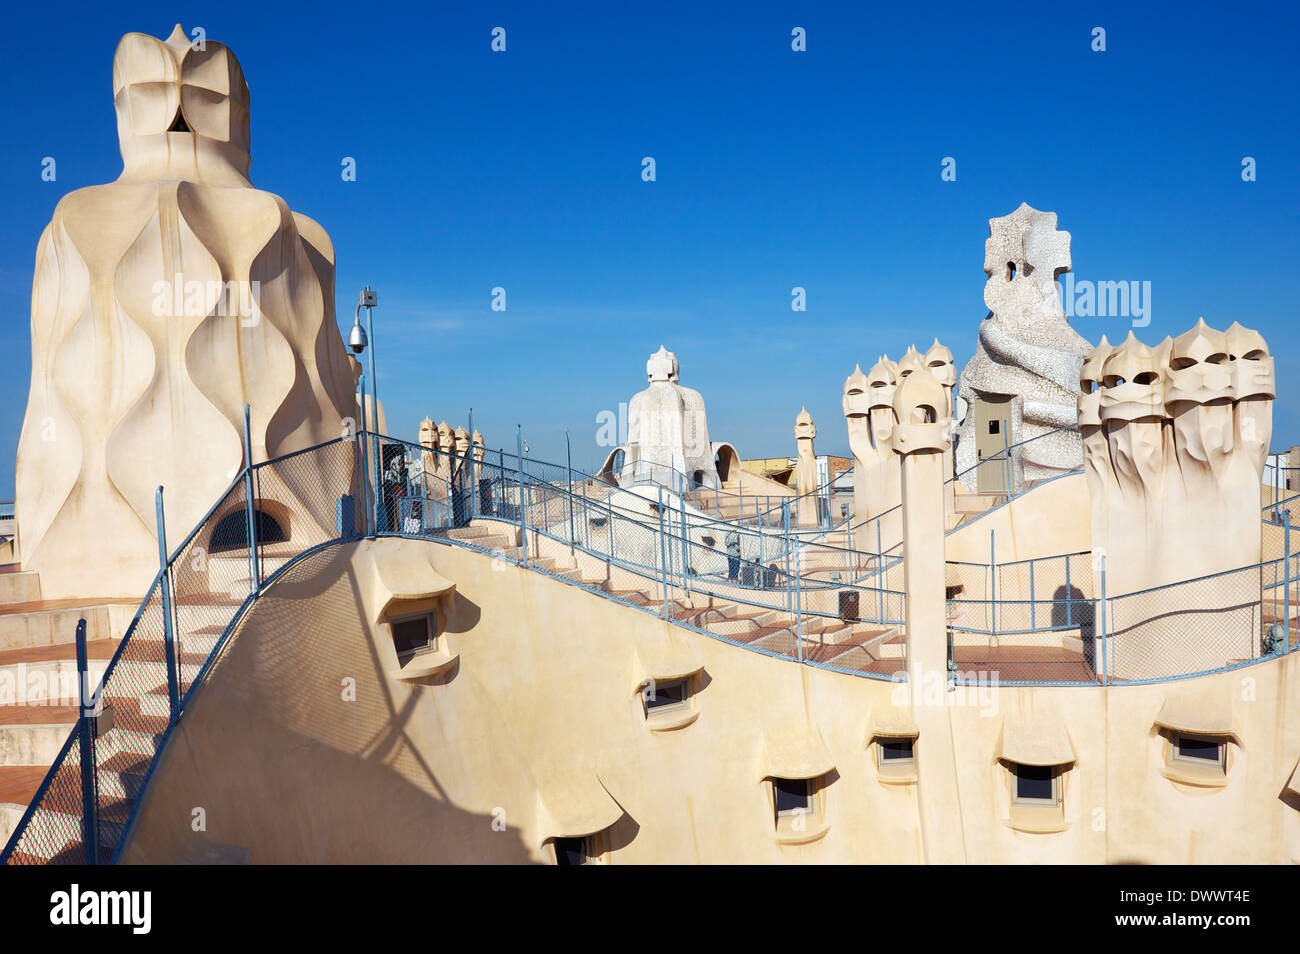 Gaudi Chimneys statues at Casa Mila, Barcelona, Spain Stock Photo